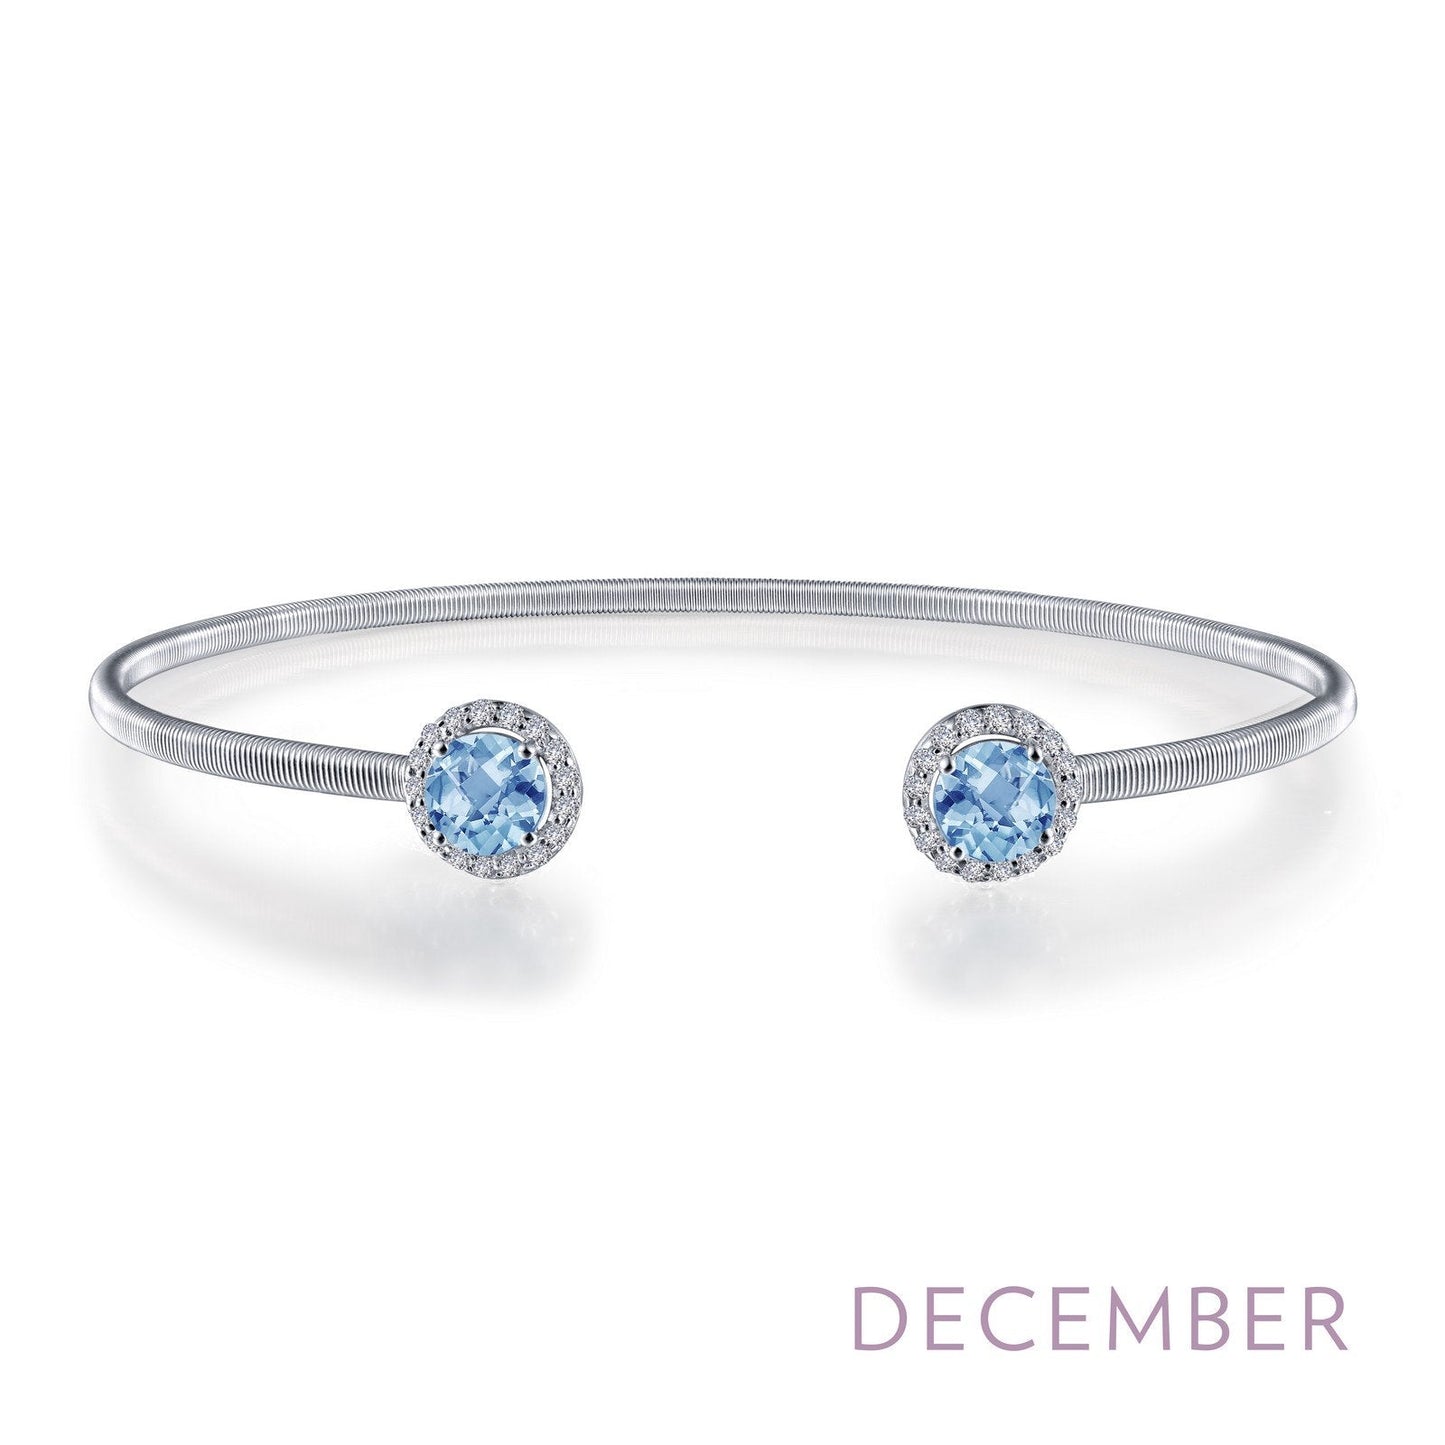 Lafonn December Birthstone Bracelet DECEMBER BRACELETS Platinum Appx CTW: 1.26 cts. BLUE TOPAZ Appx 0.92 cts.  Lassaire simulated diamonds: 0.34 cts. CTS Width approx. 7.5mm